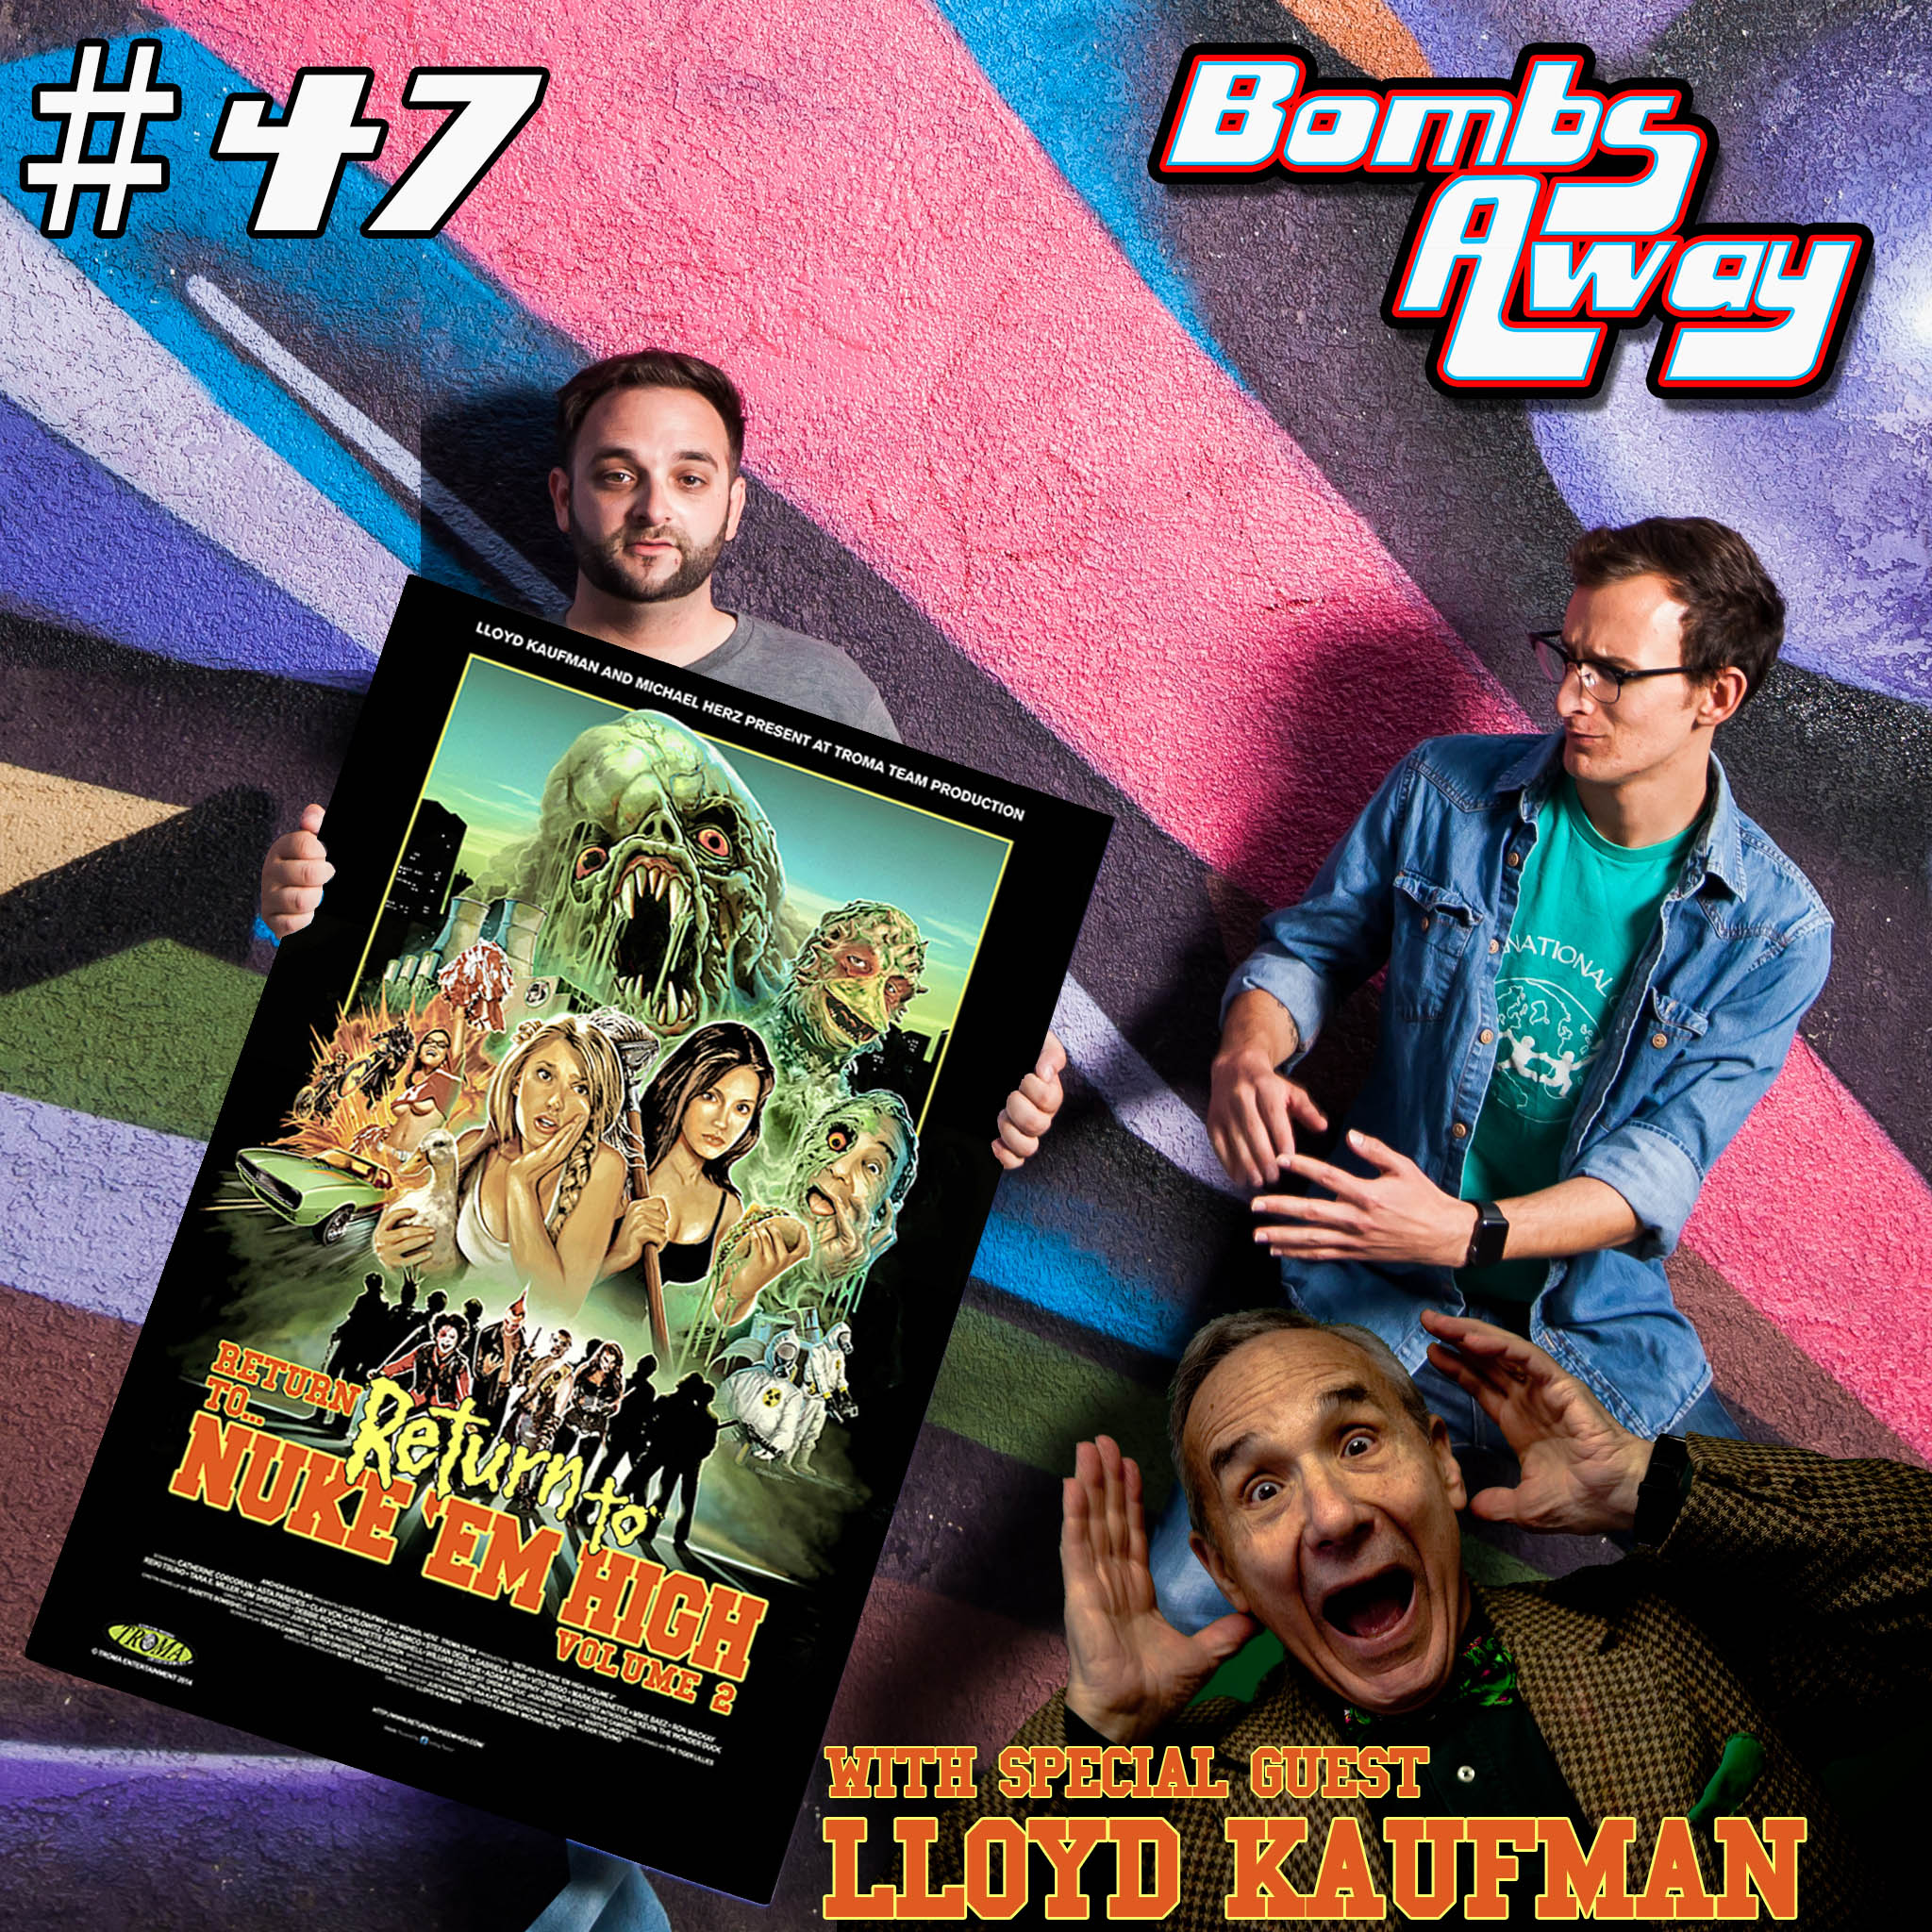 Episode 47 - Lloyd Kaufman interviews Bombs Away aka Return to Return to Nuke Em High aka Volume 2 (2017)